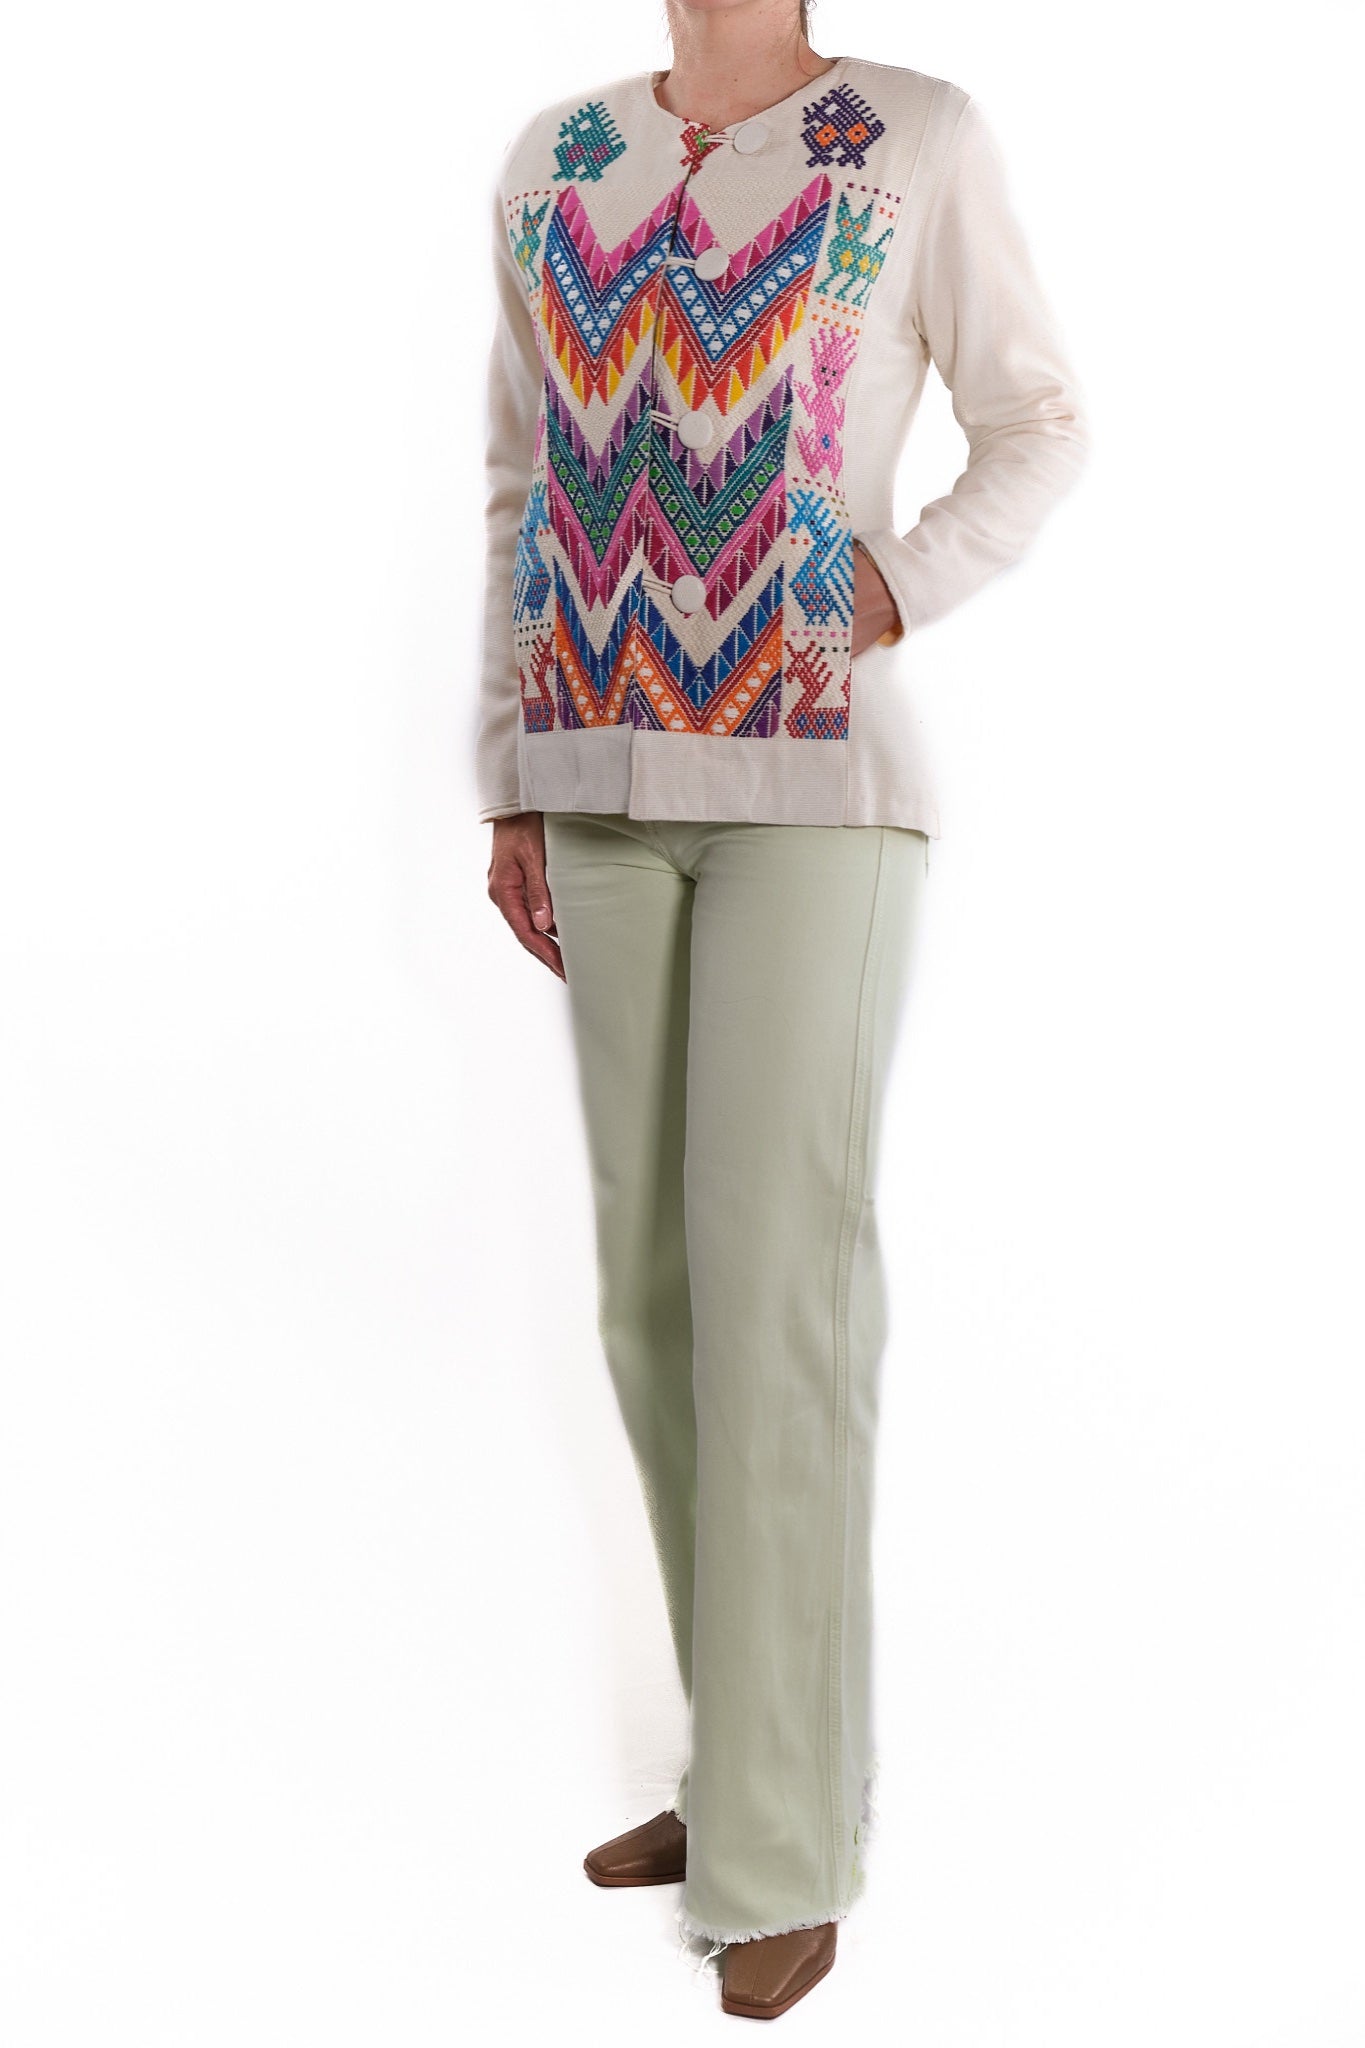 Arcoiris Jacket ecru white multicolor embroidery